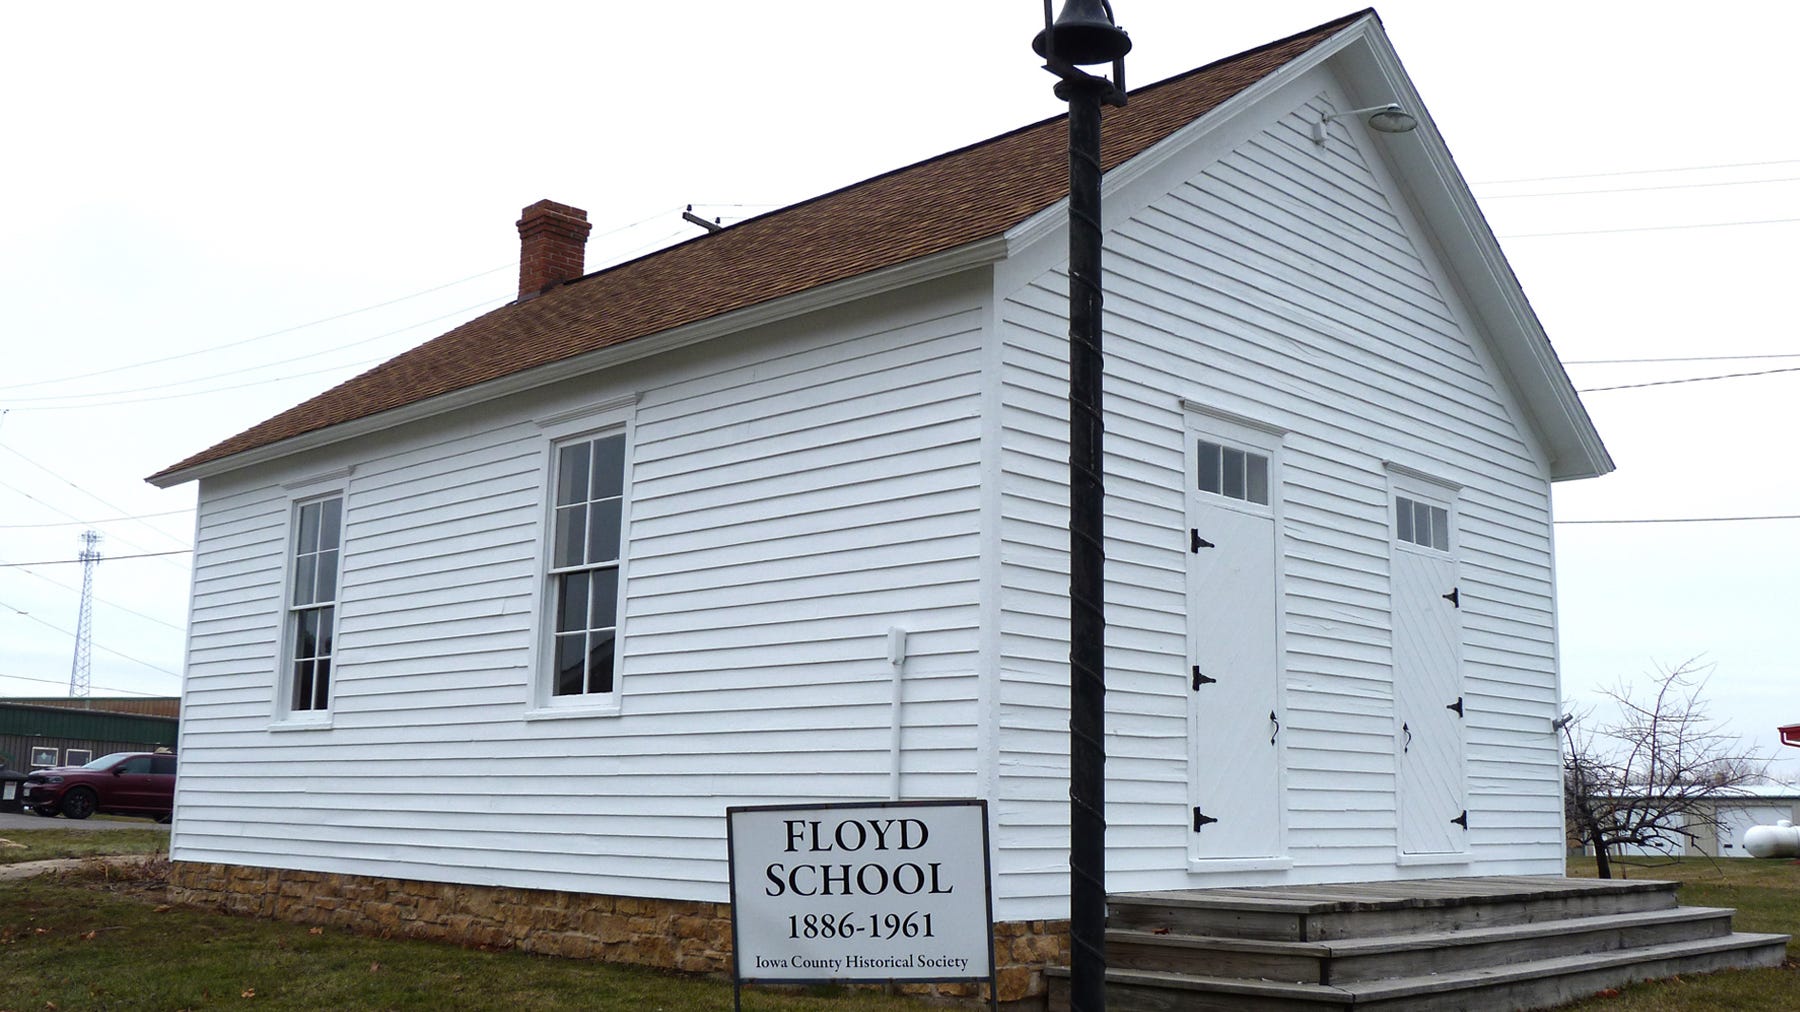 Floyd School, a one-room school built in 1886 